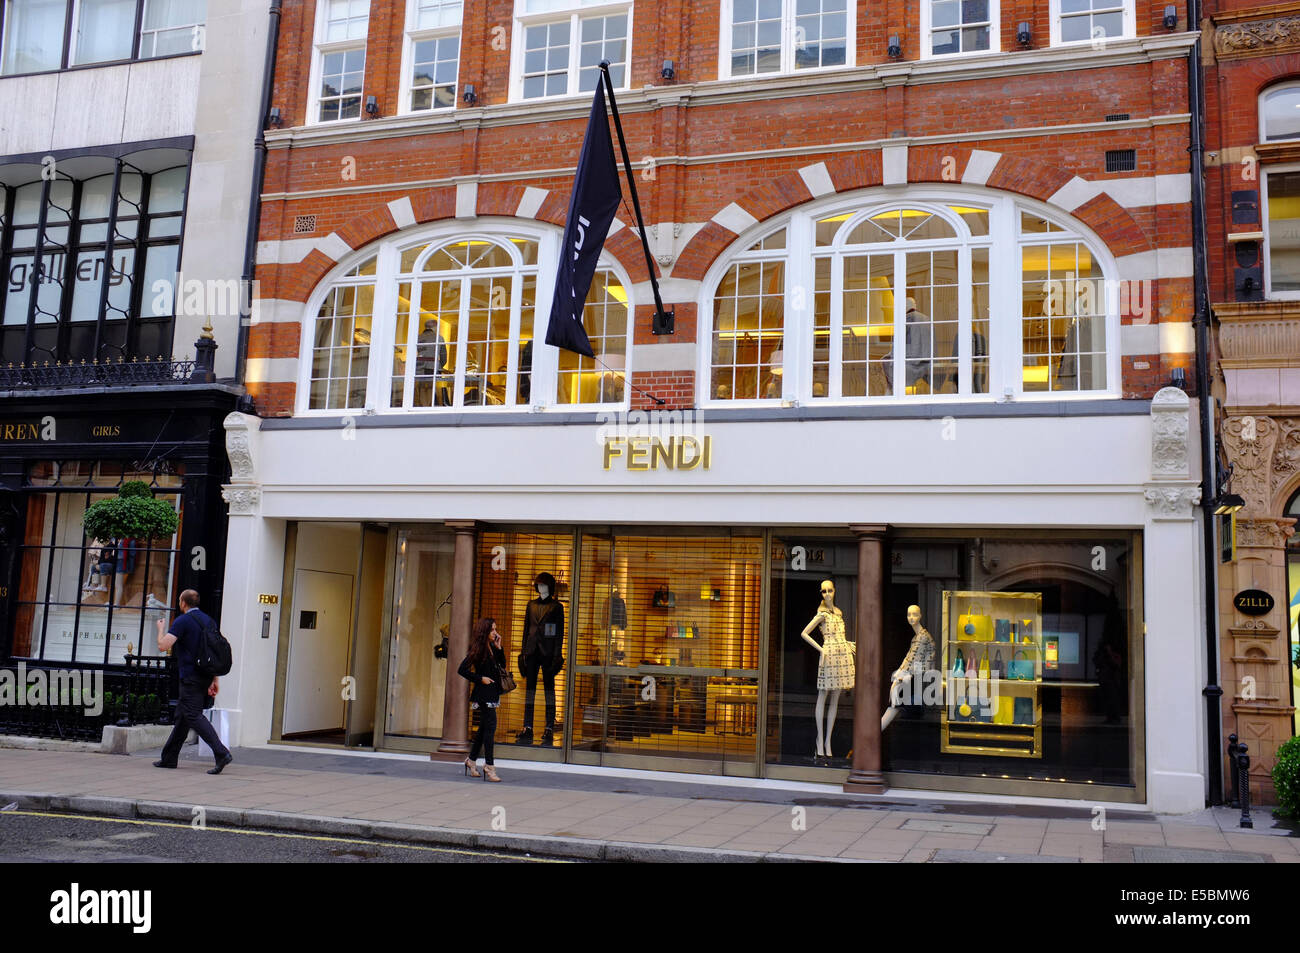 FENDI designer fashion store on Bond 